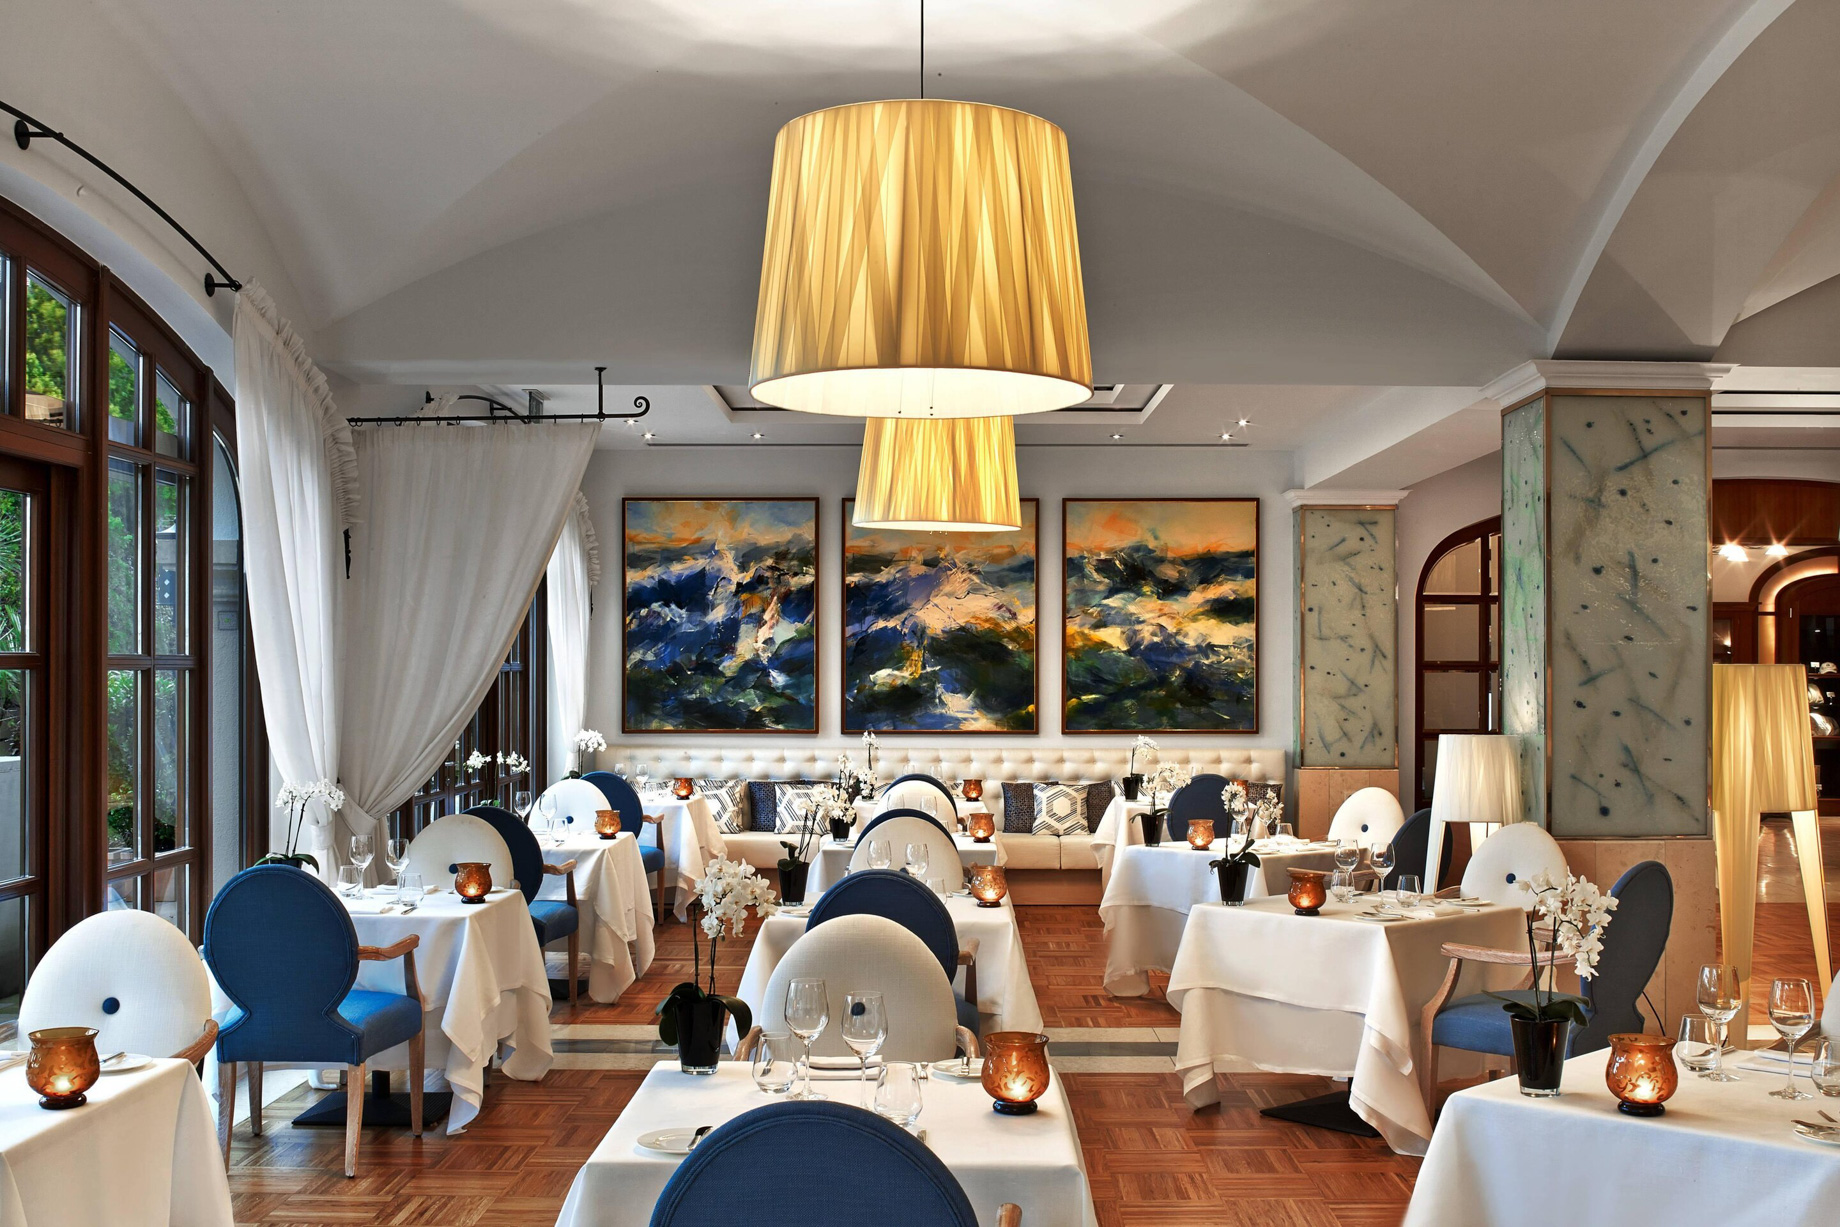 The St. Regis Mardavall Mallorca Resort - Palma de Mallorca, Spain - Aqua Restaurant Tables